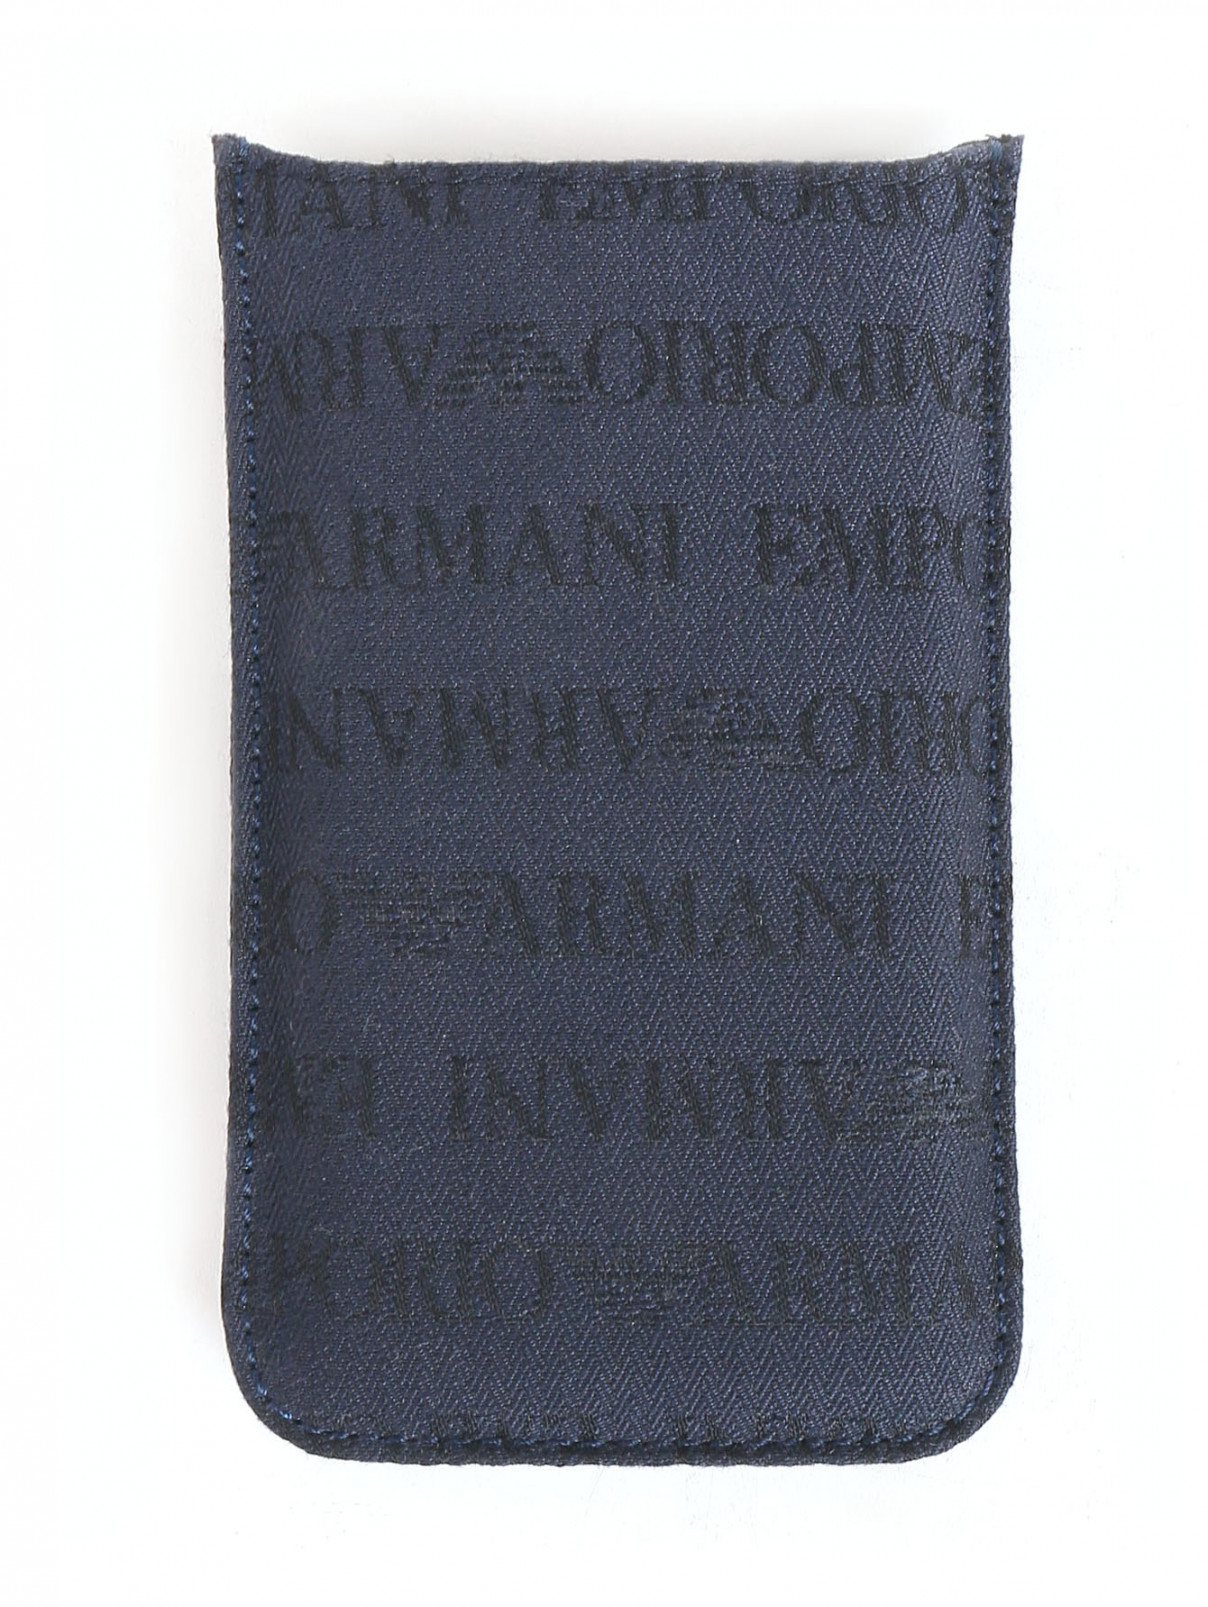 чехол для iphone c узором Emporio Armani  –  Общий вид  – Цвет:  Синий